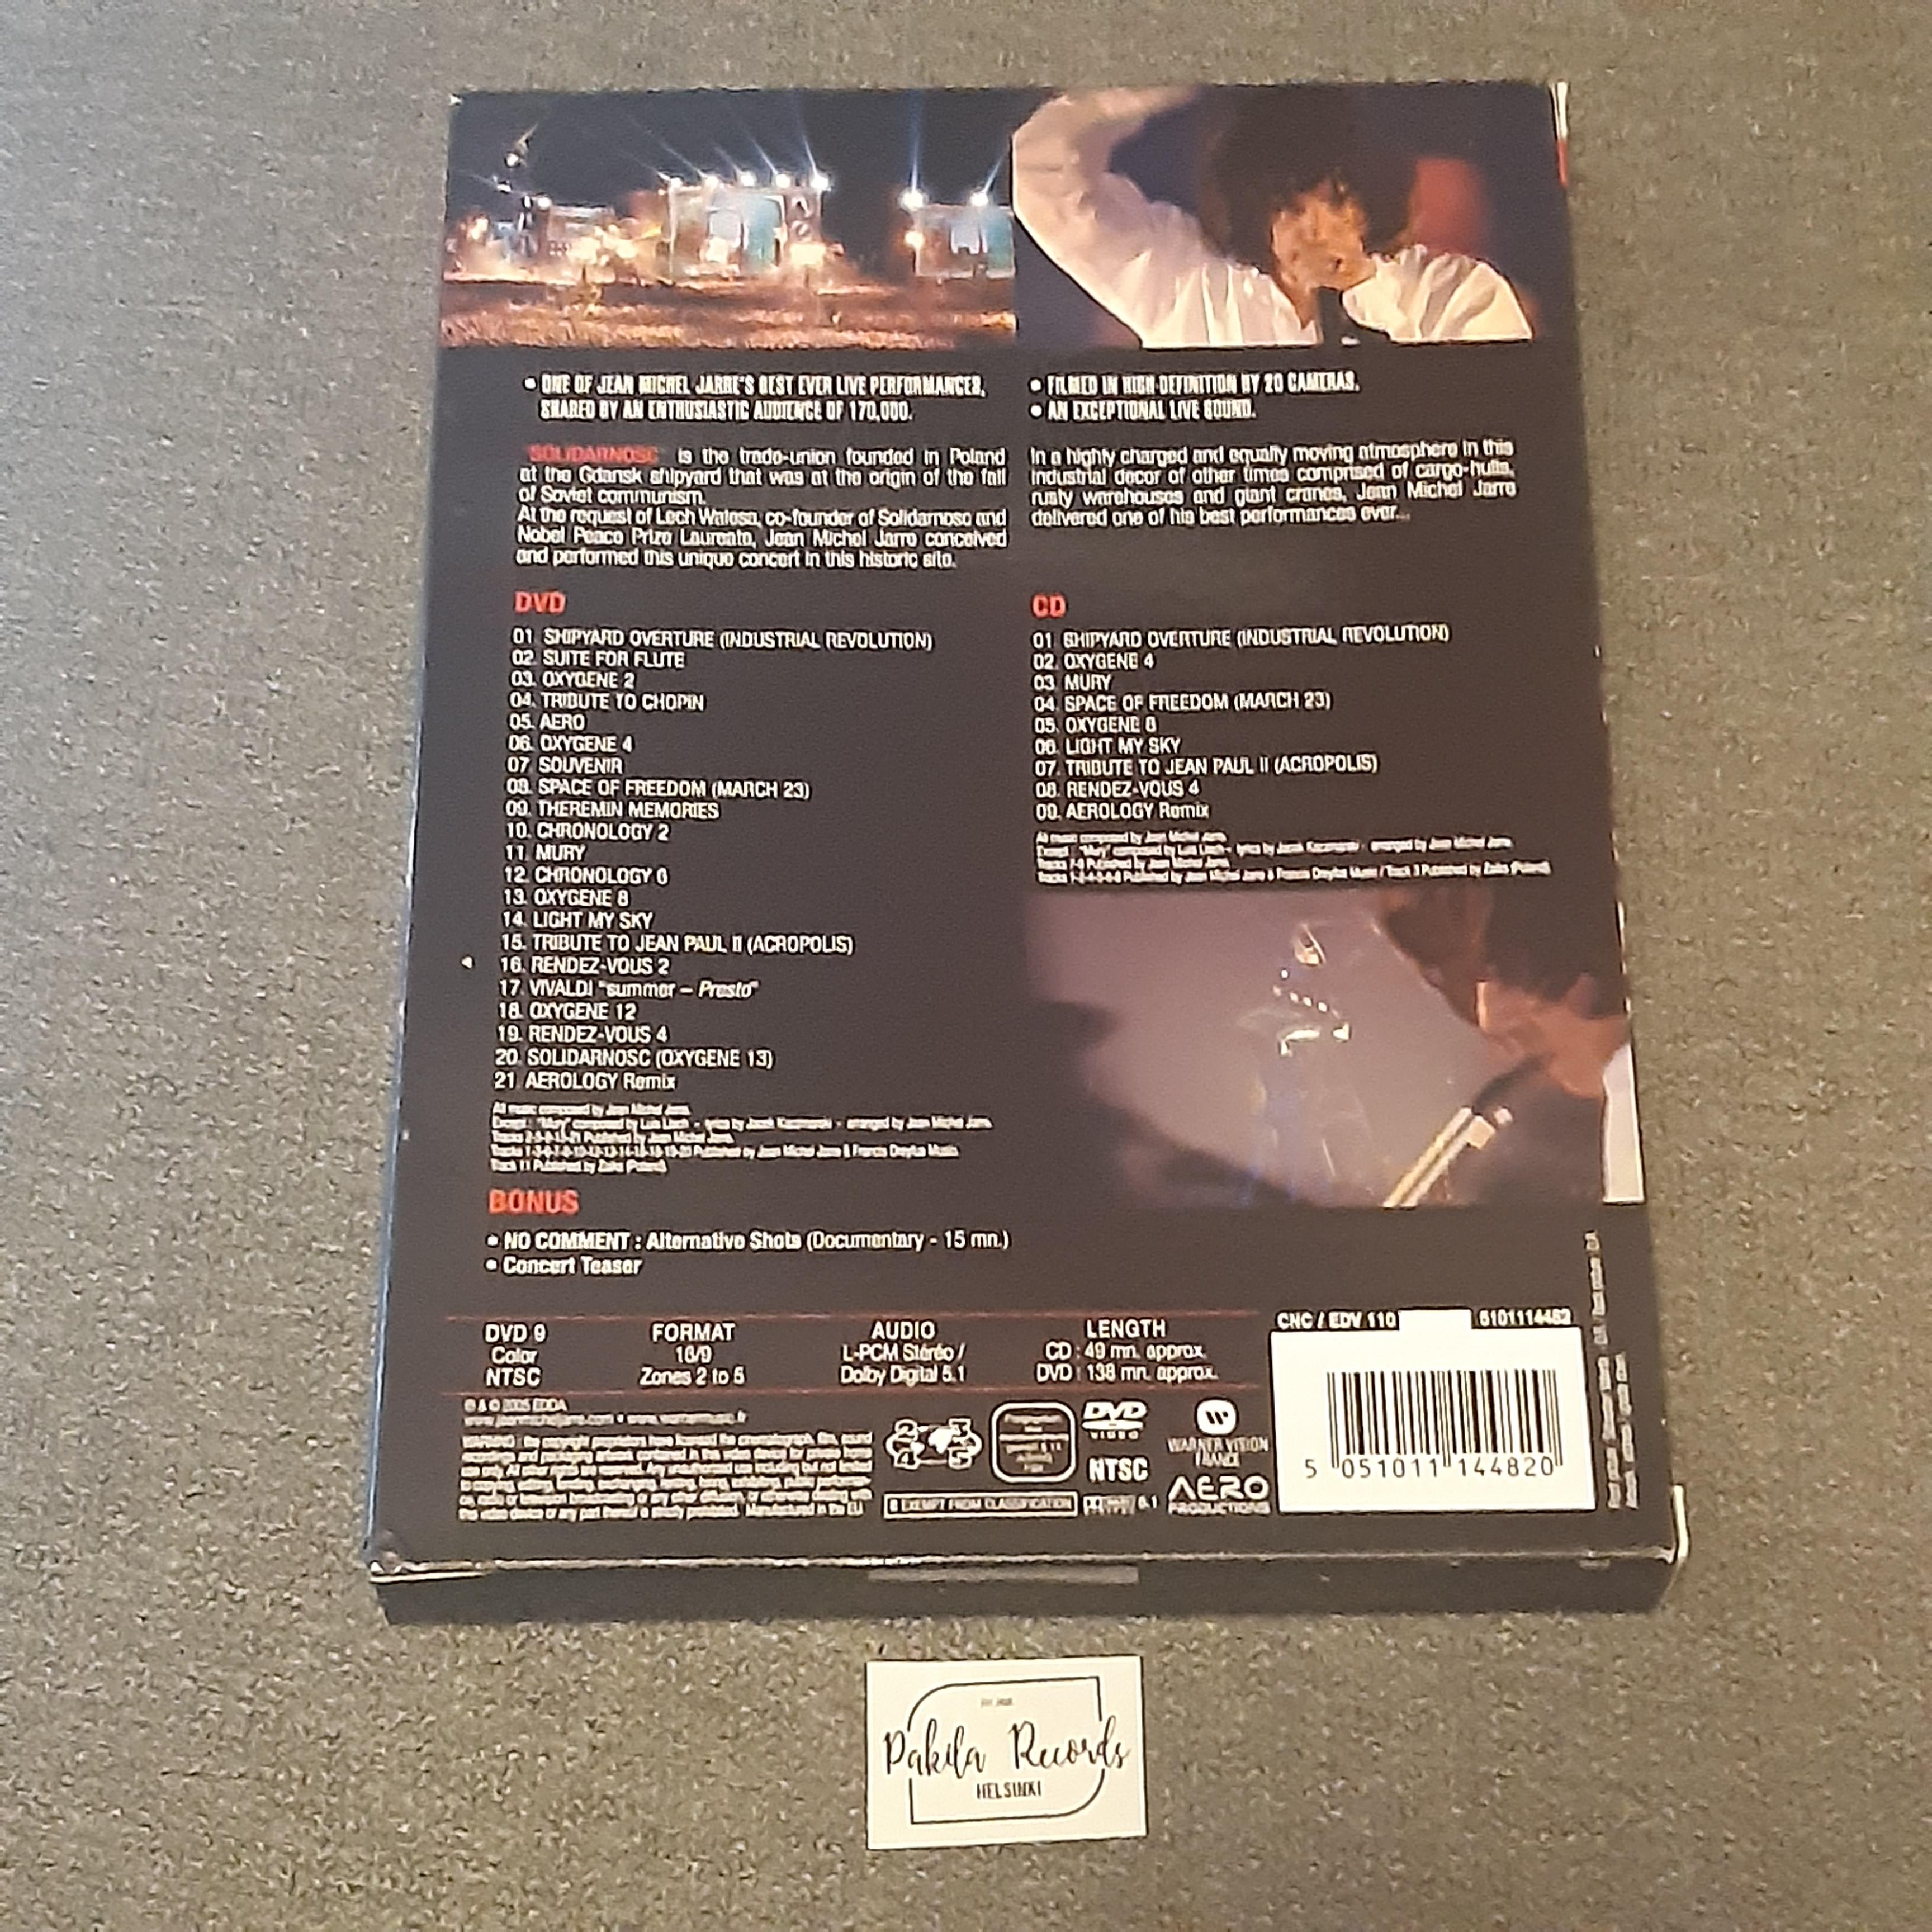 Jean Michel Jarre - Solidarność Live - DVD + CD (käytetty)